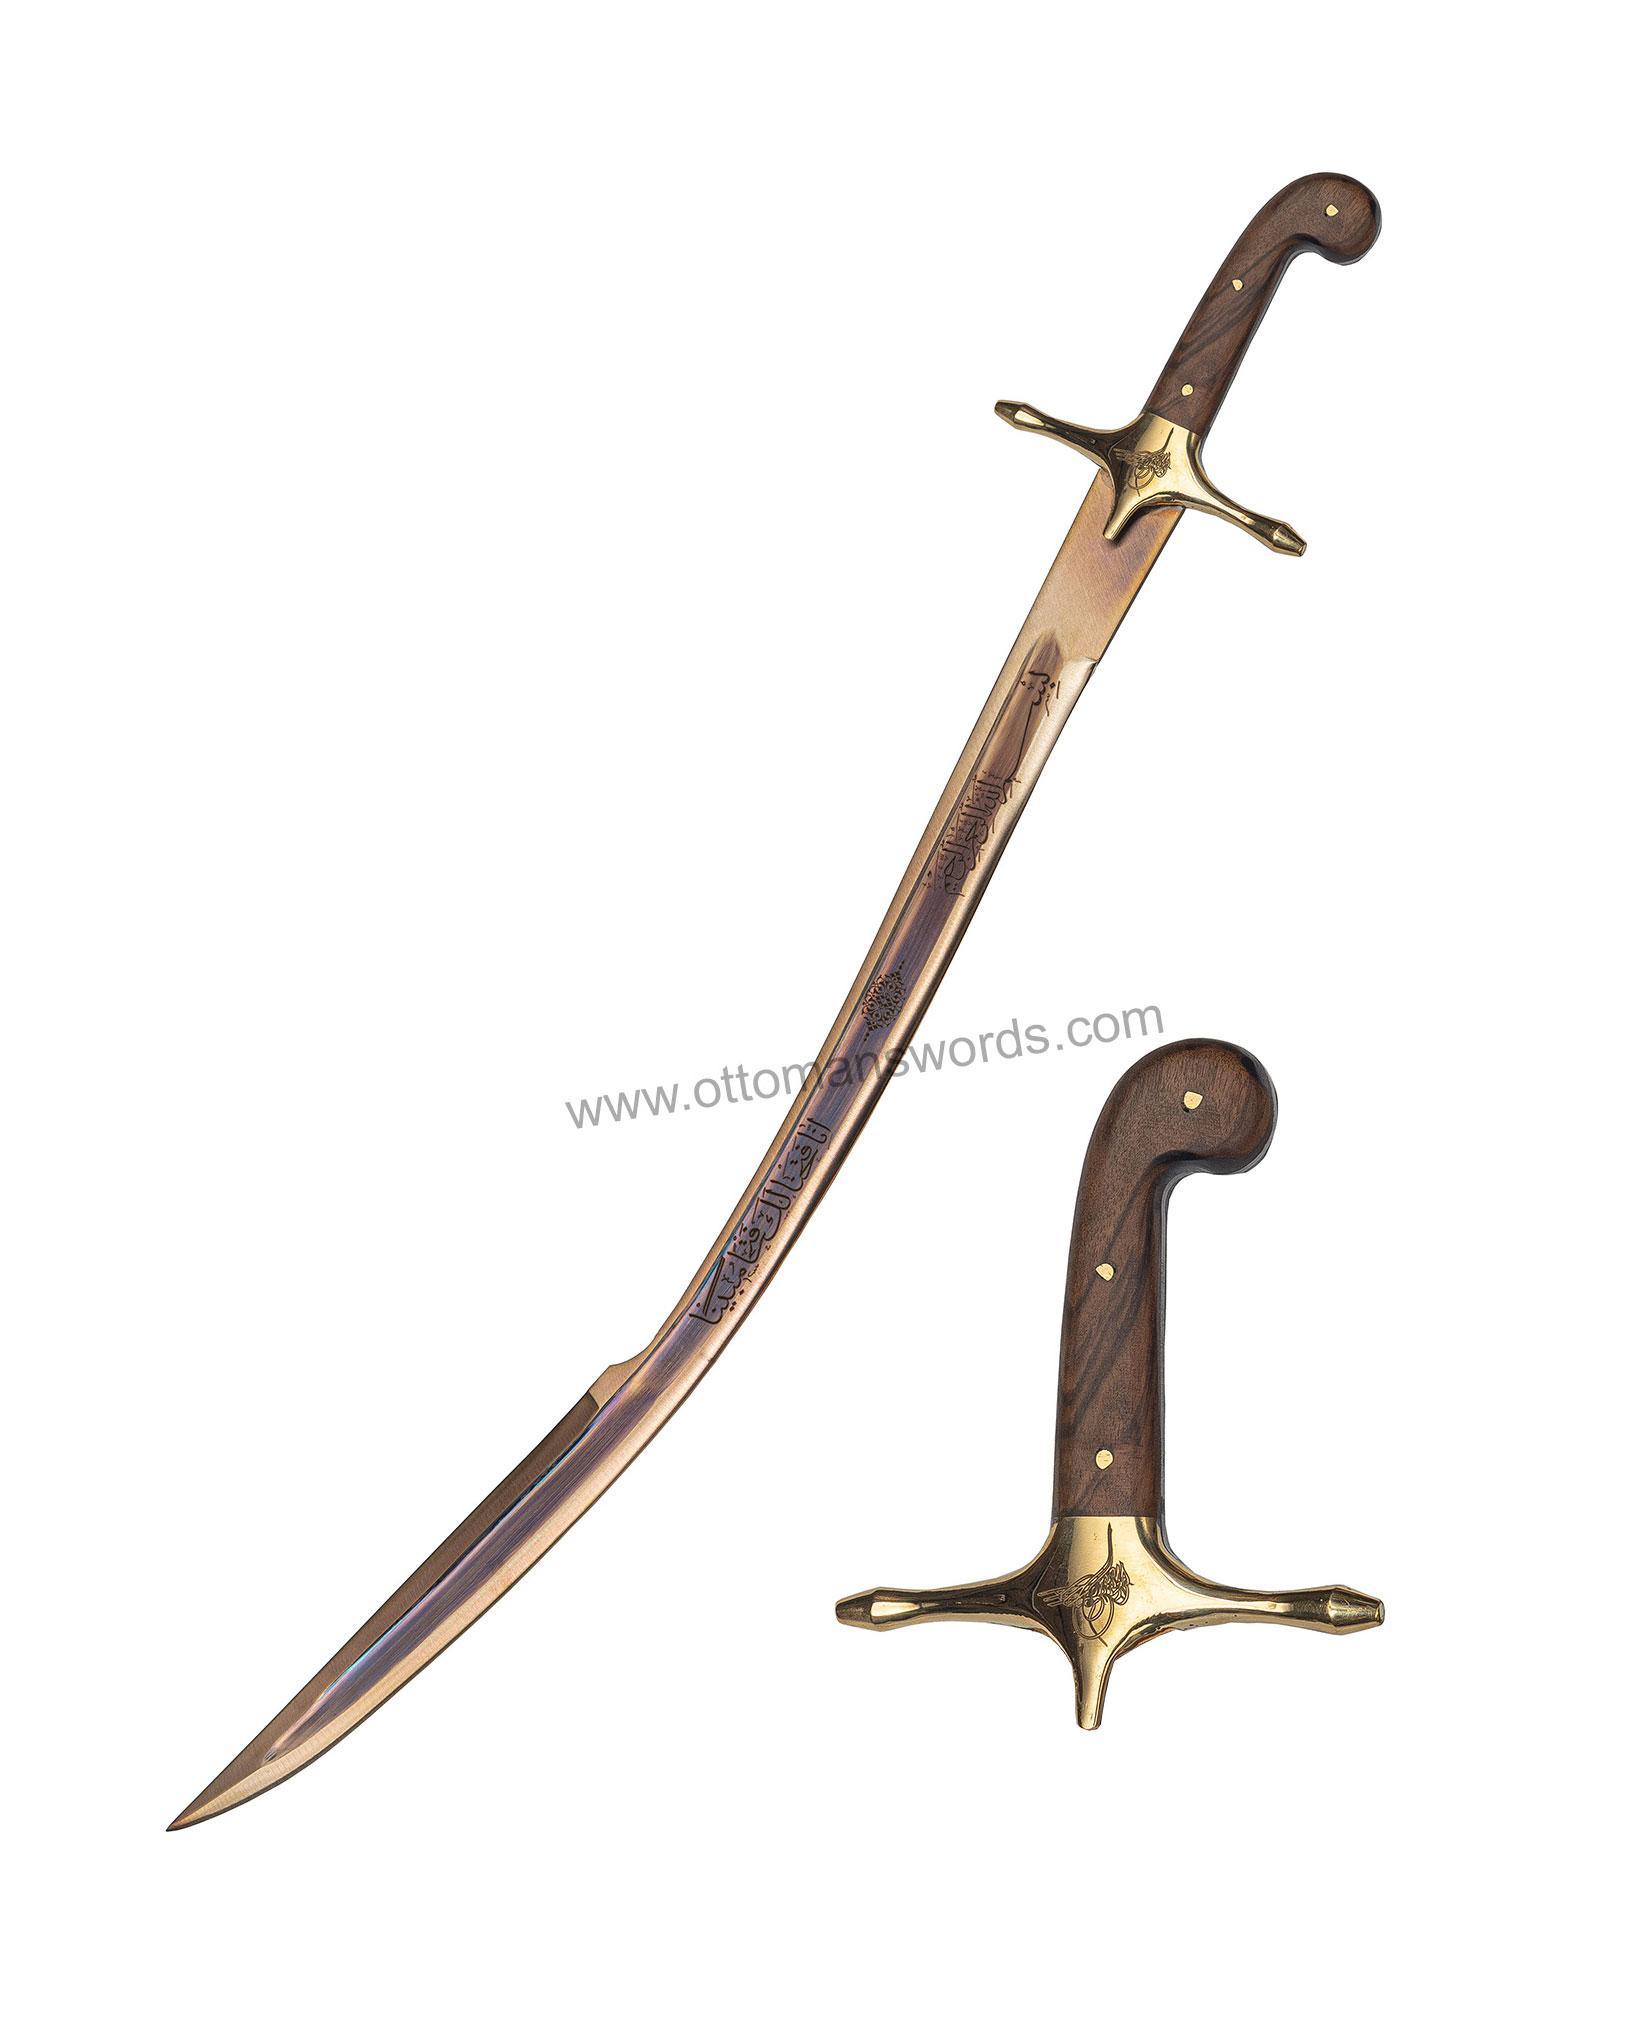 Ottoman-Curved-Kilij-Sword-Shop